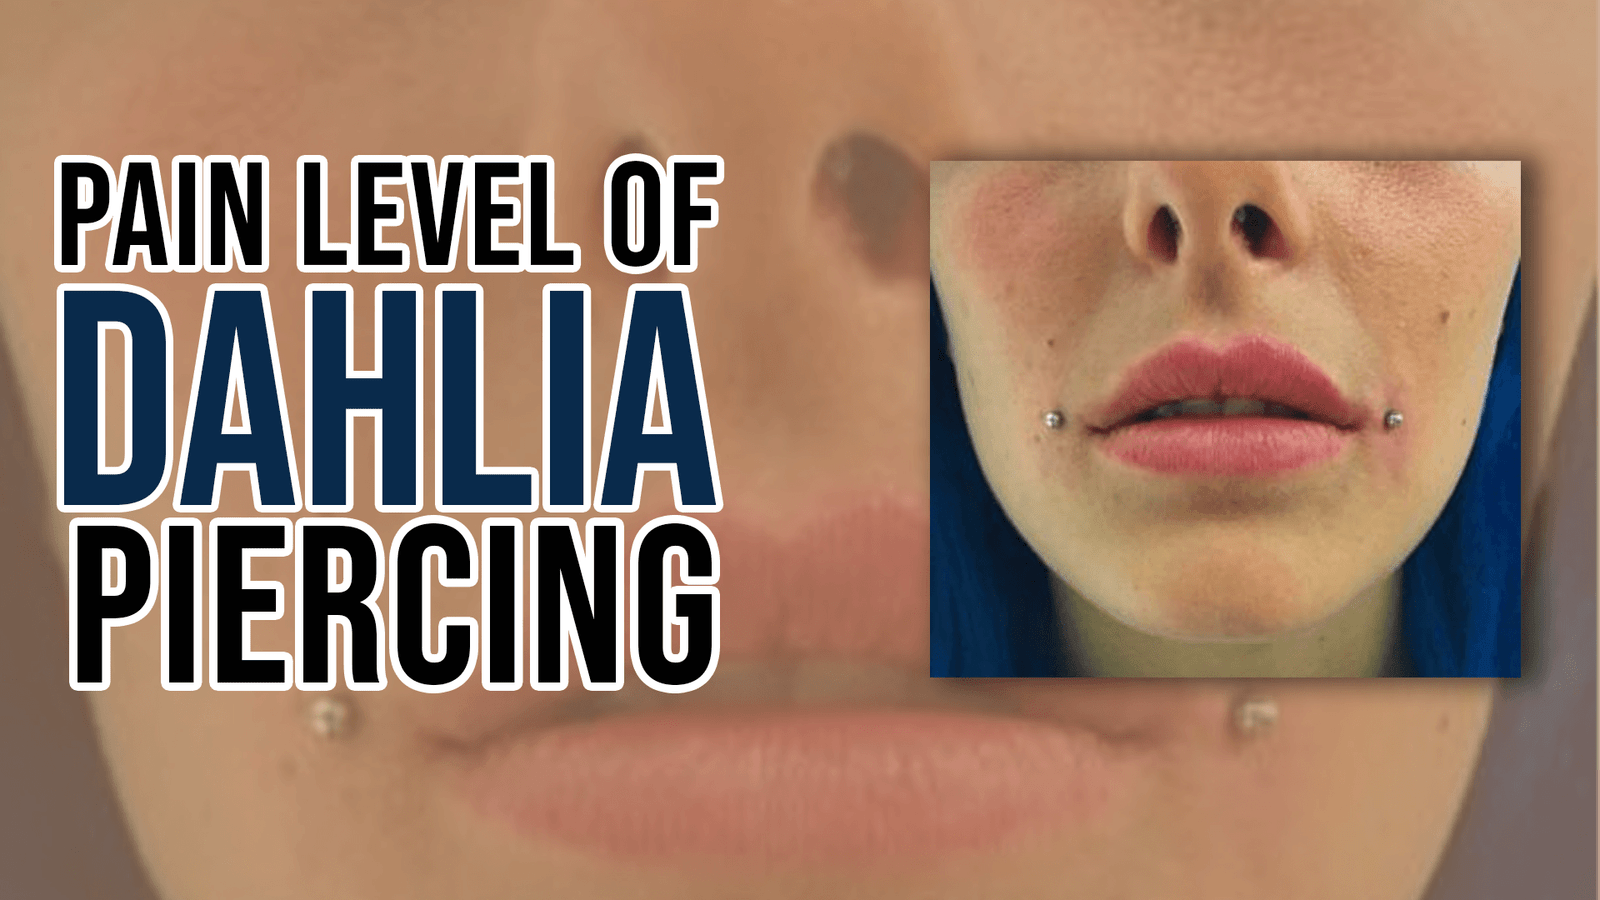 Pain Level of Dahlia Piercing